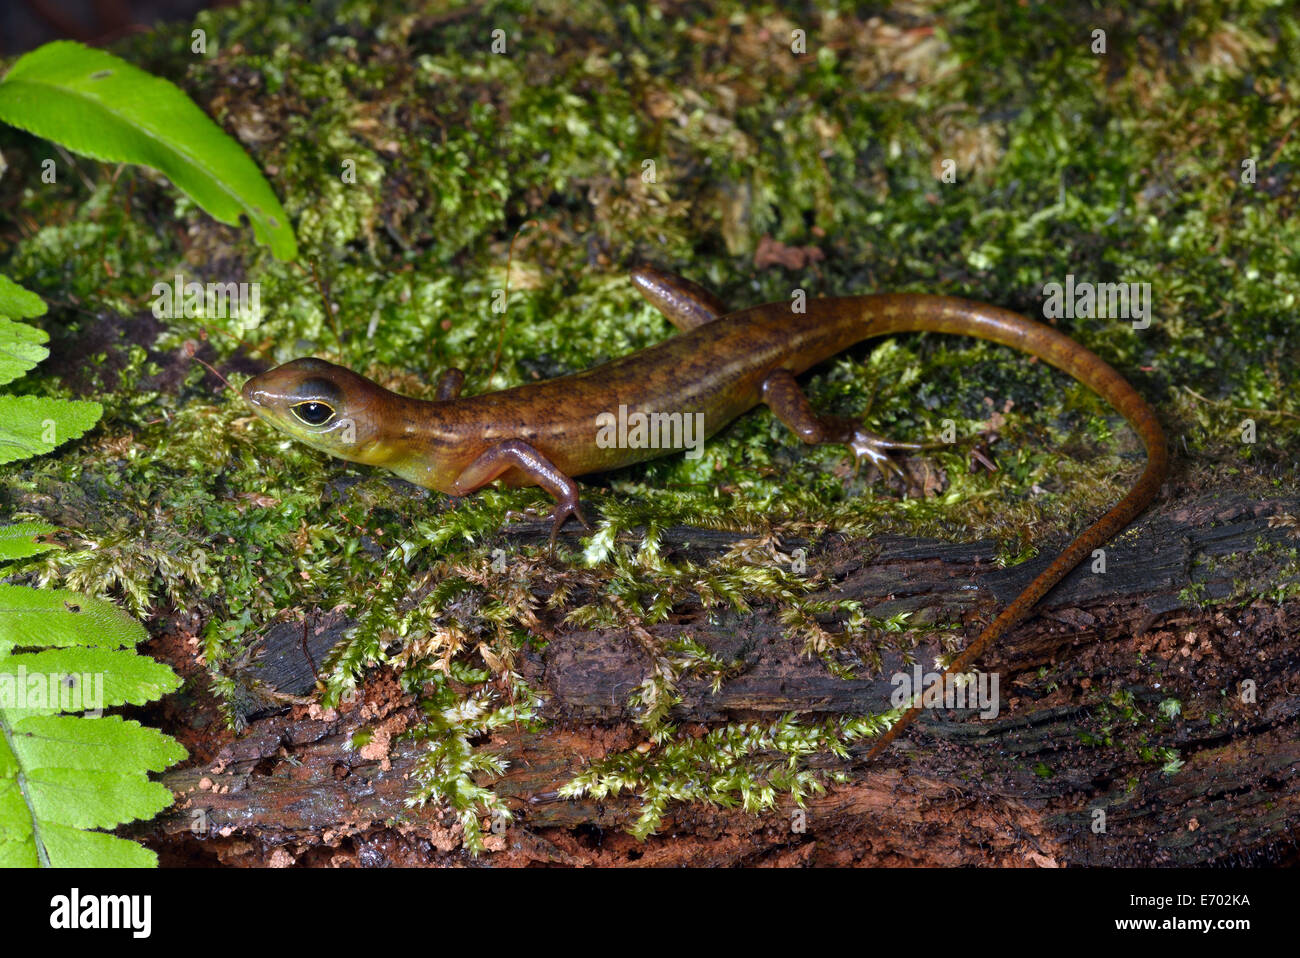 Undescribed lizard from Borneo Stock Photo